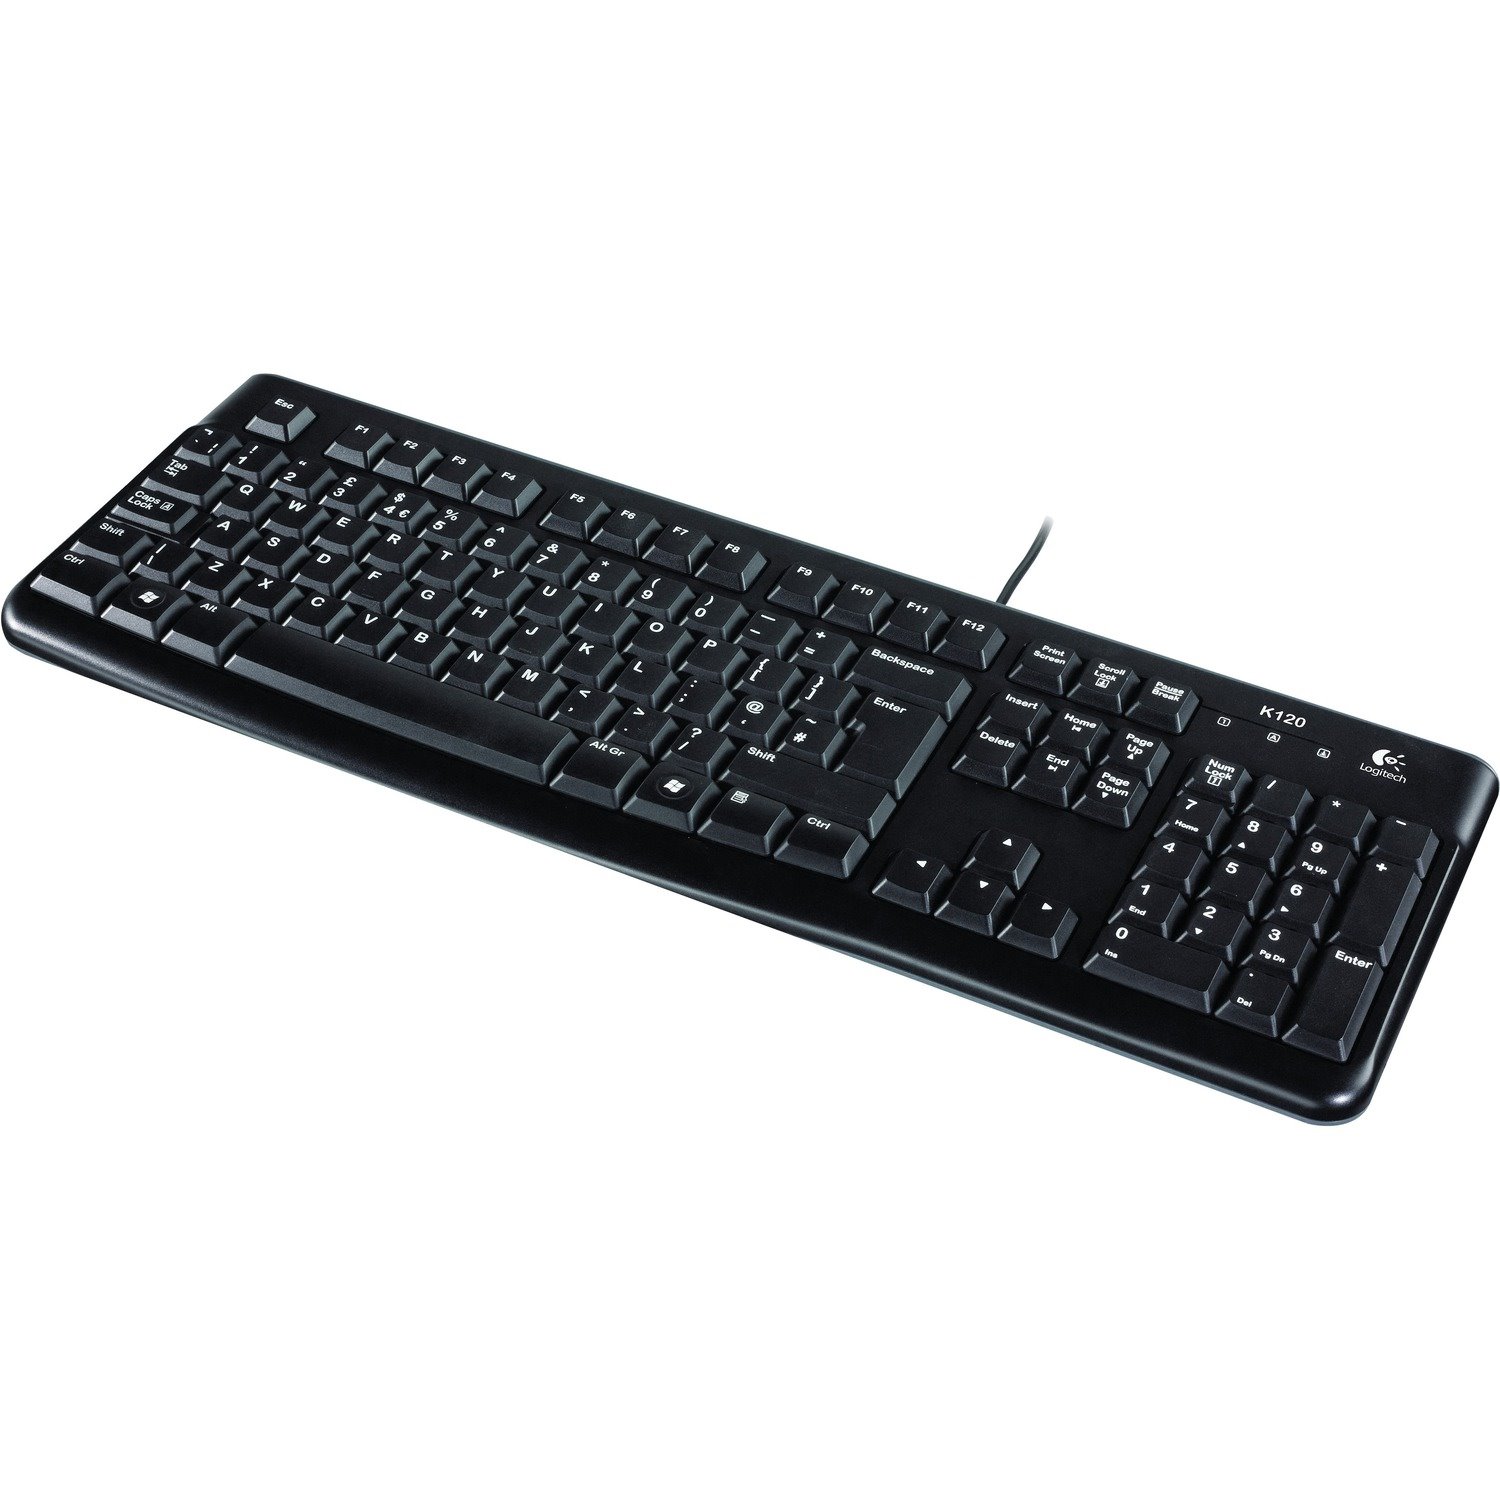 Logitech K120 Keyboard - Cable Connectivity - USB Interface - Bulgarian